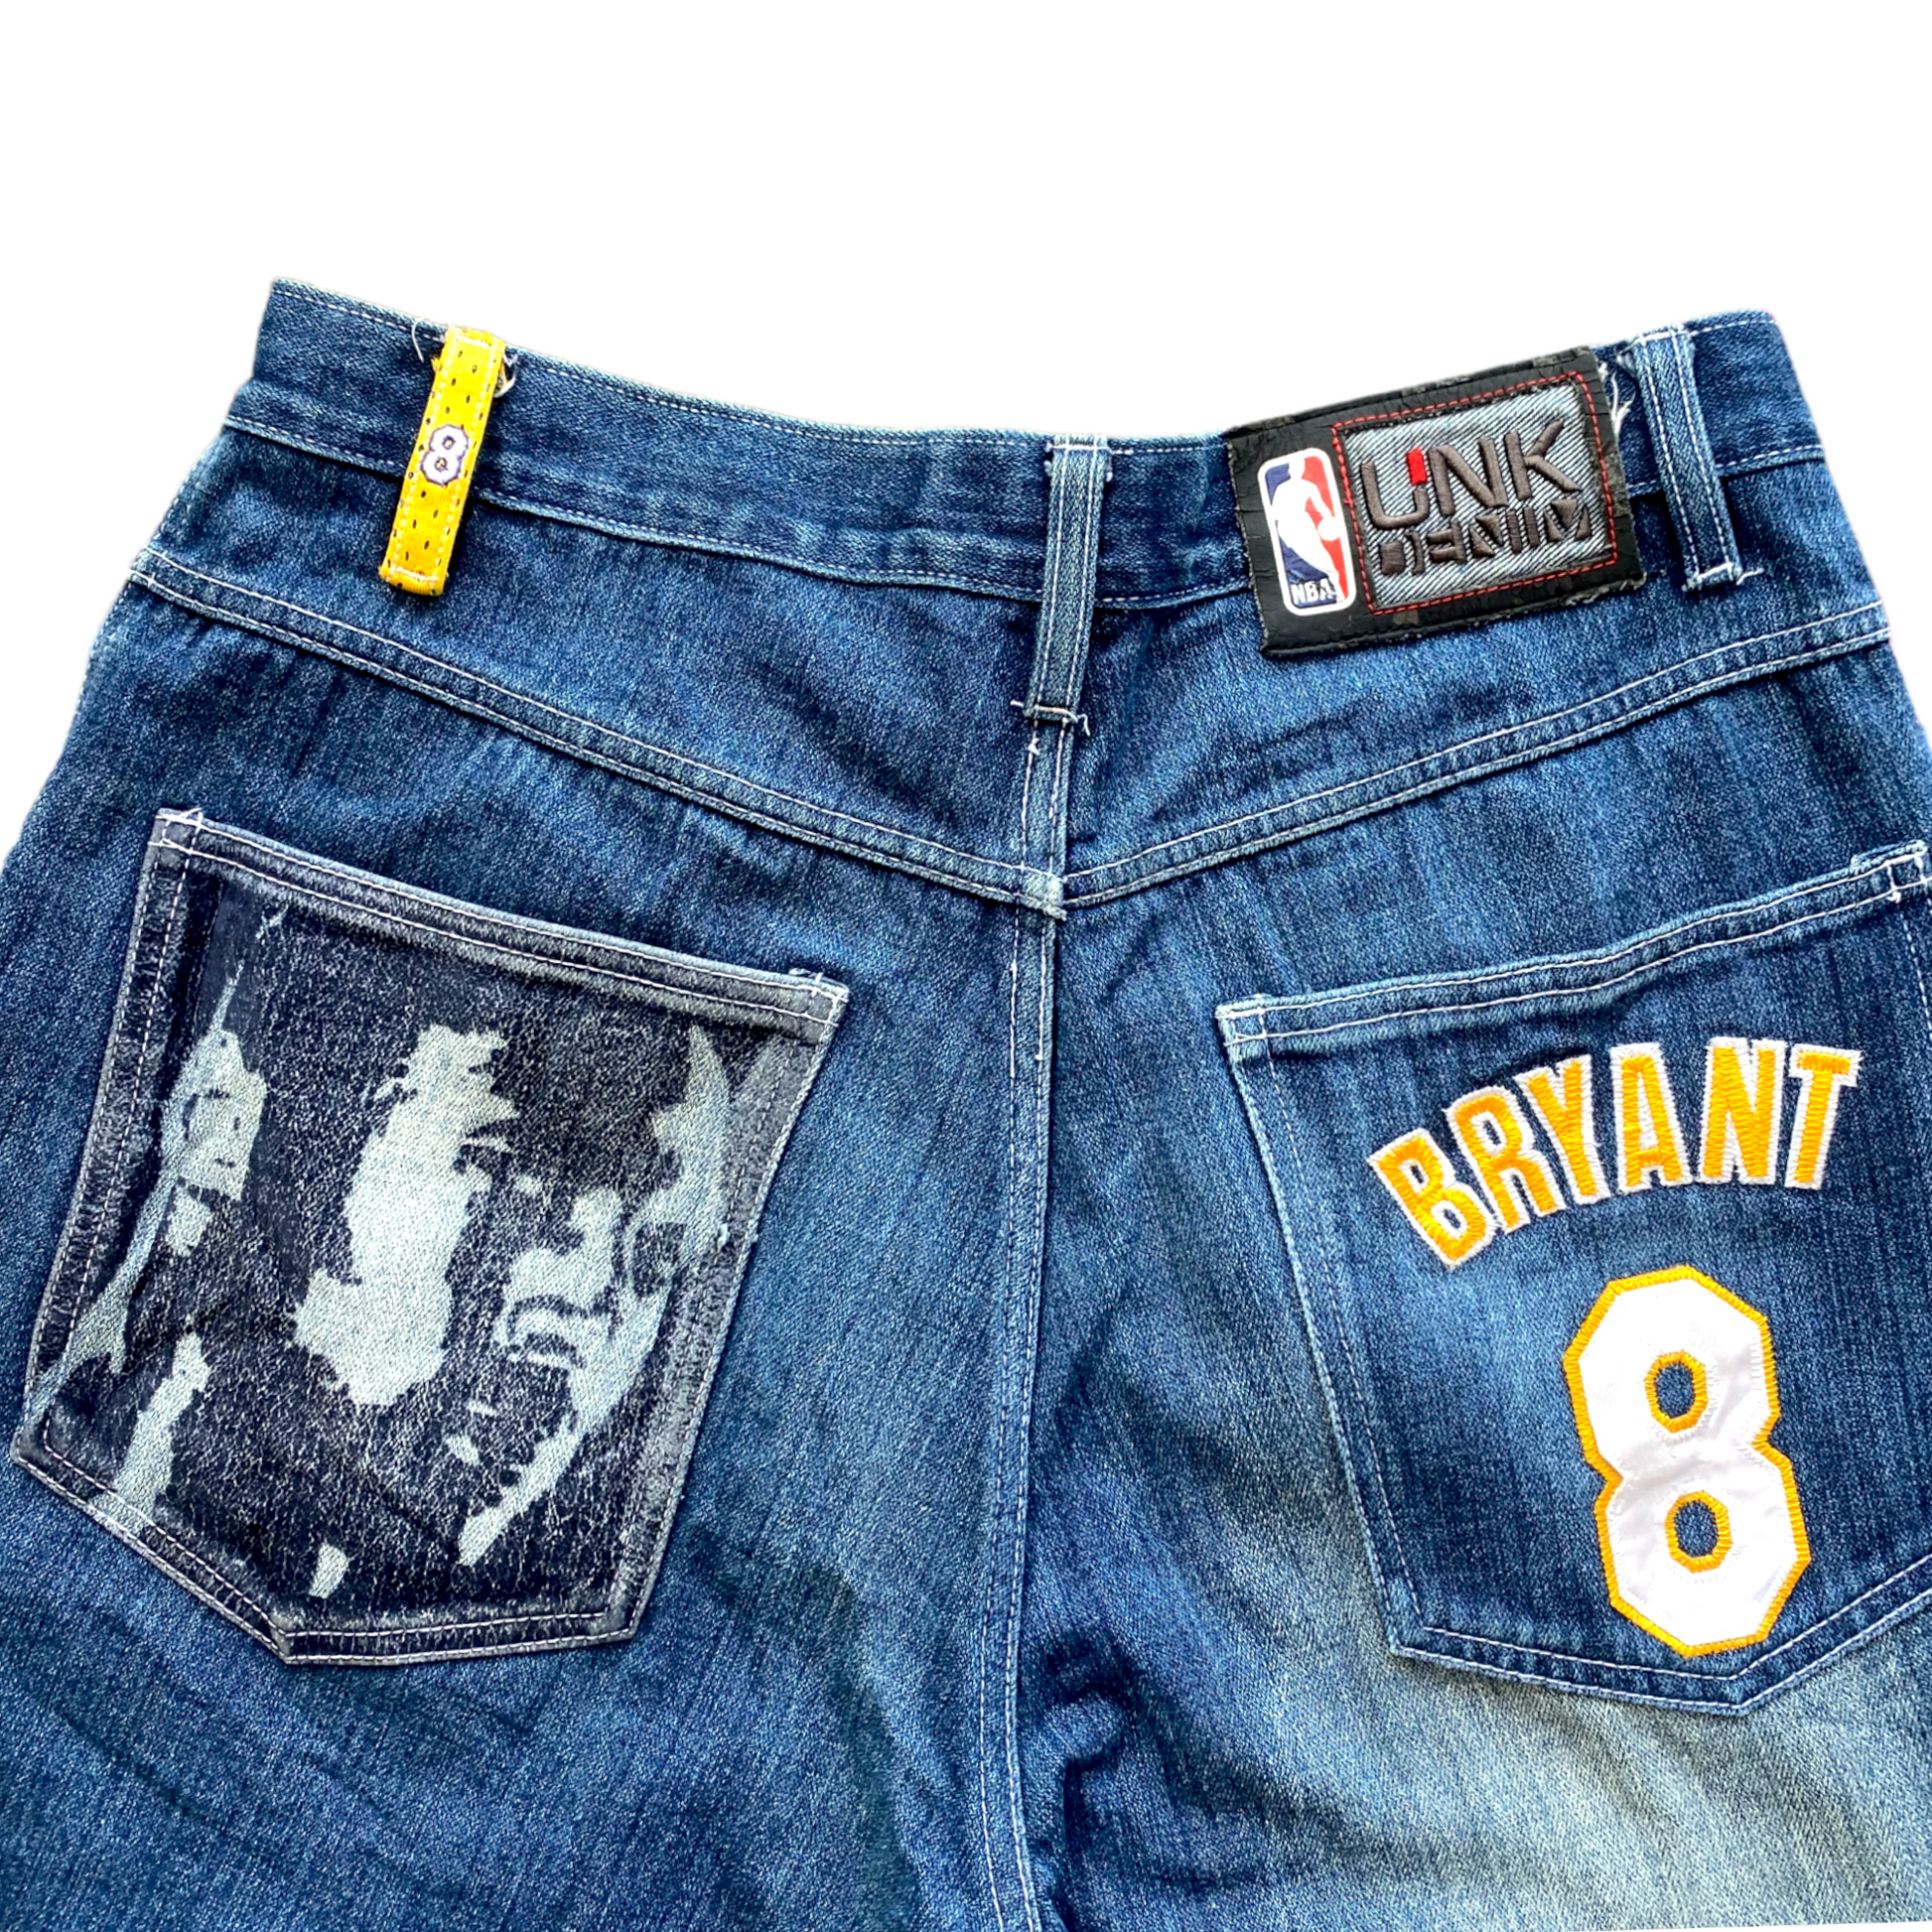 NBA Jeans